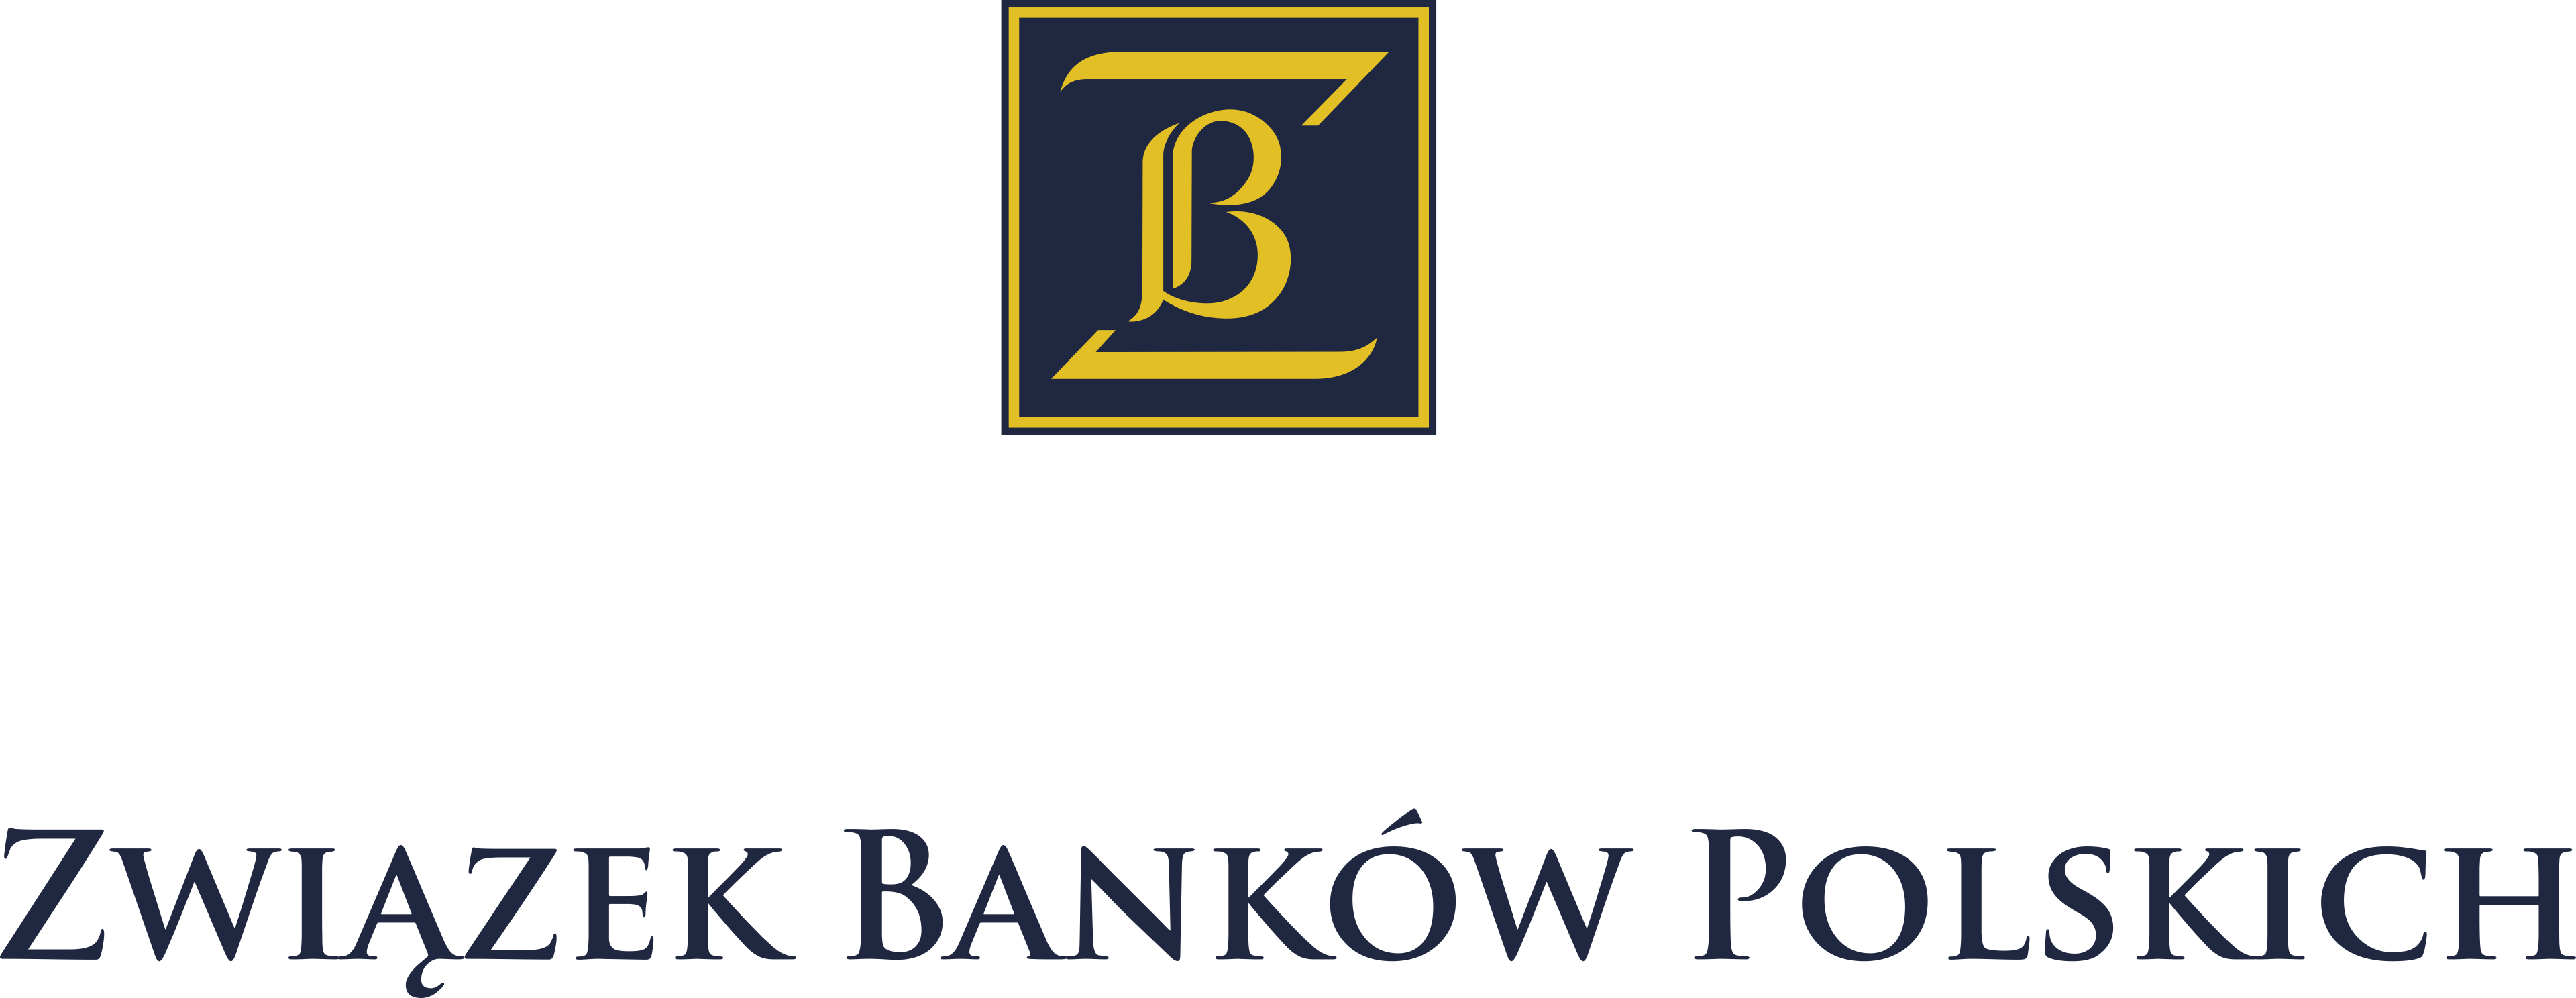 Polish Bank Association 